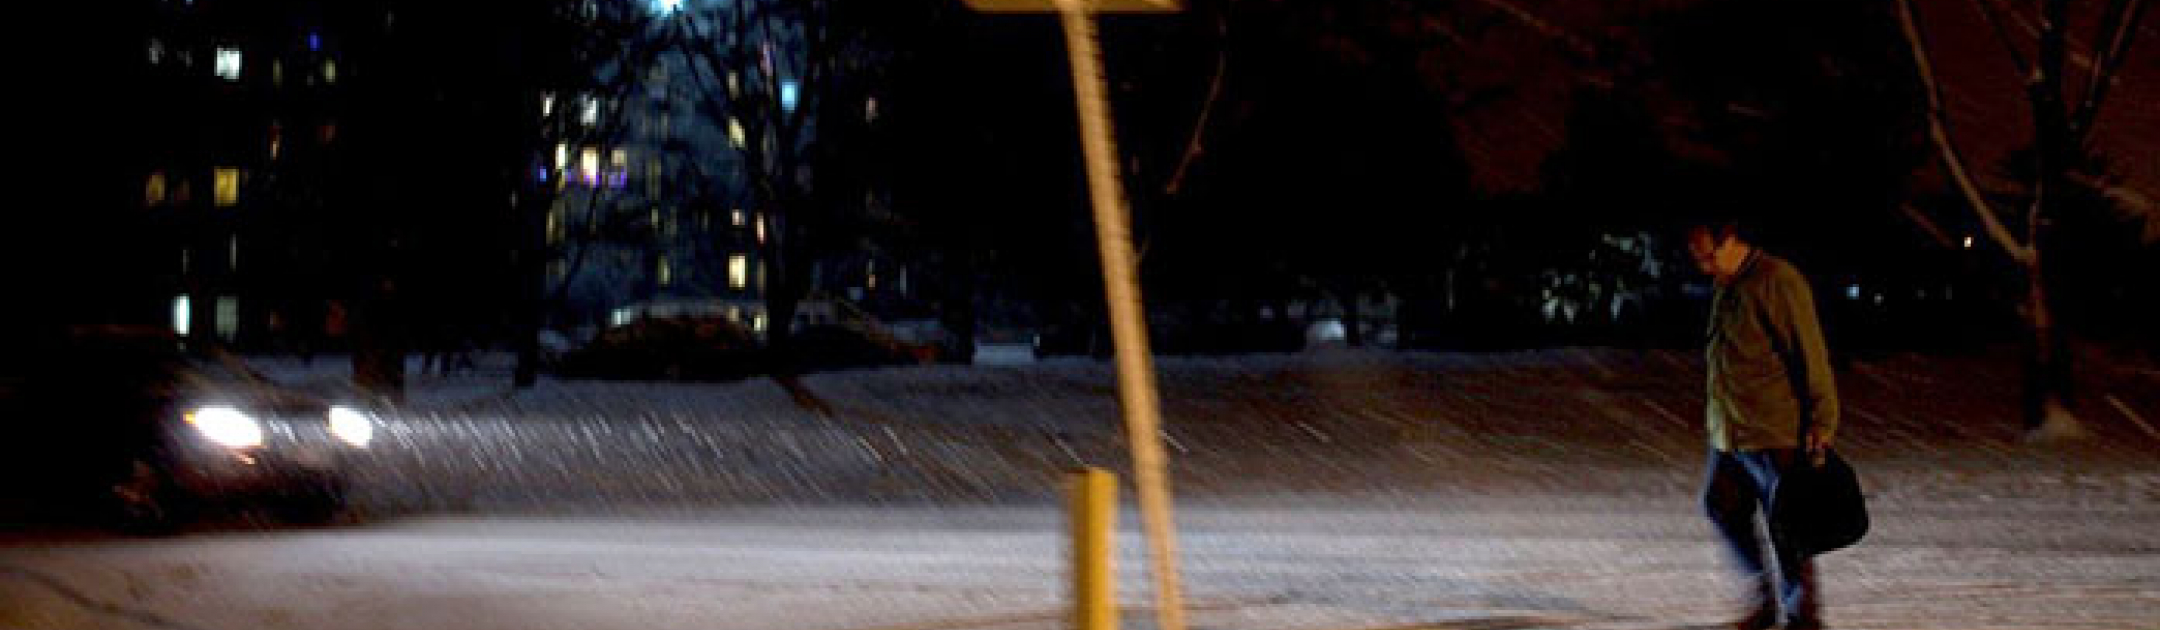 A man walks alone on a street at night with car headlights shining towards him